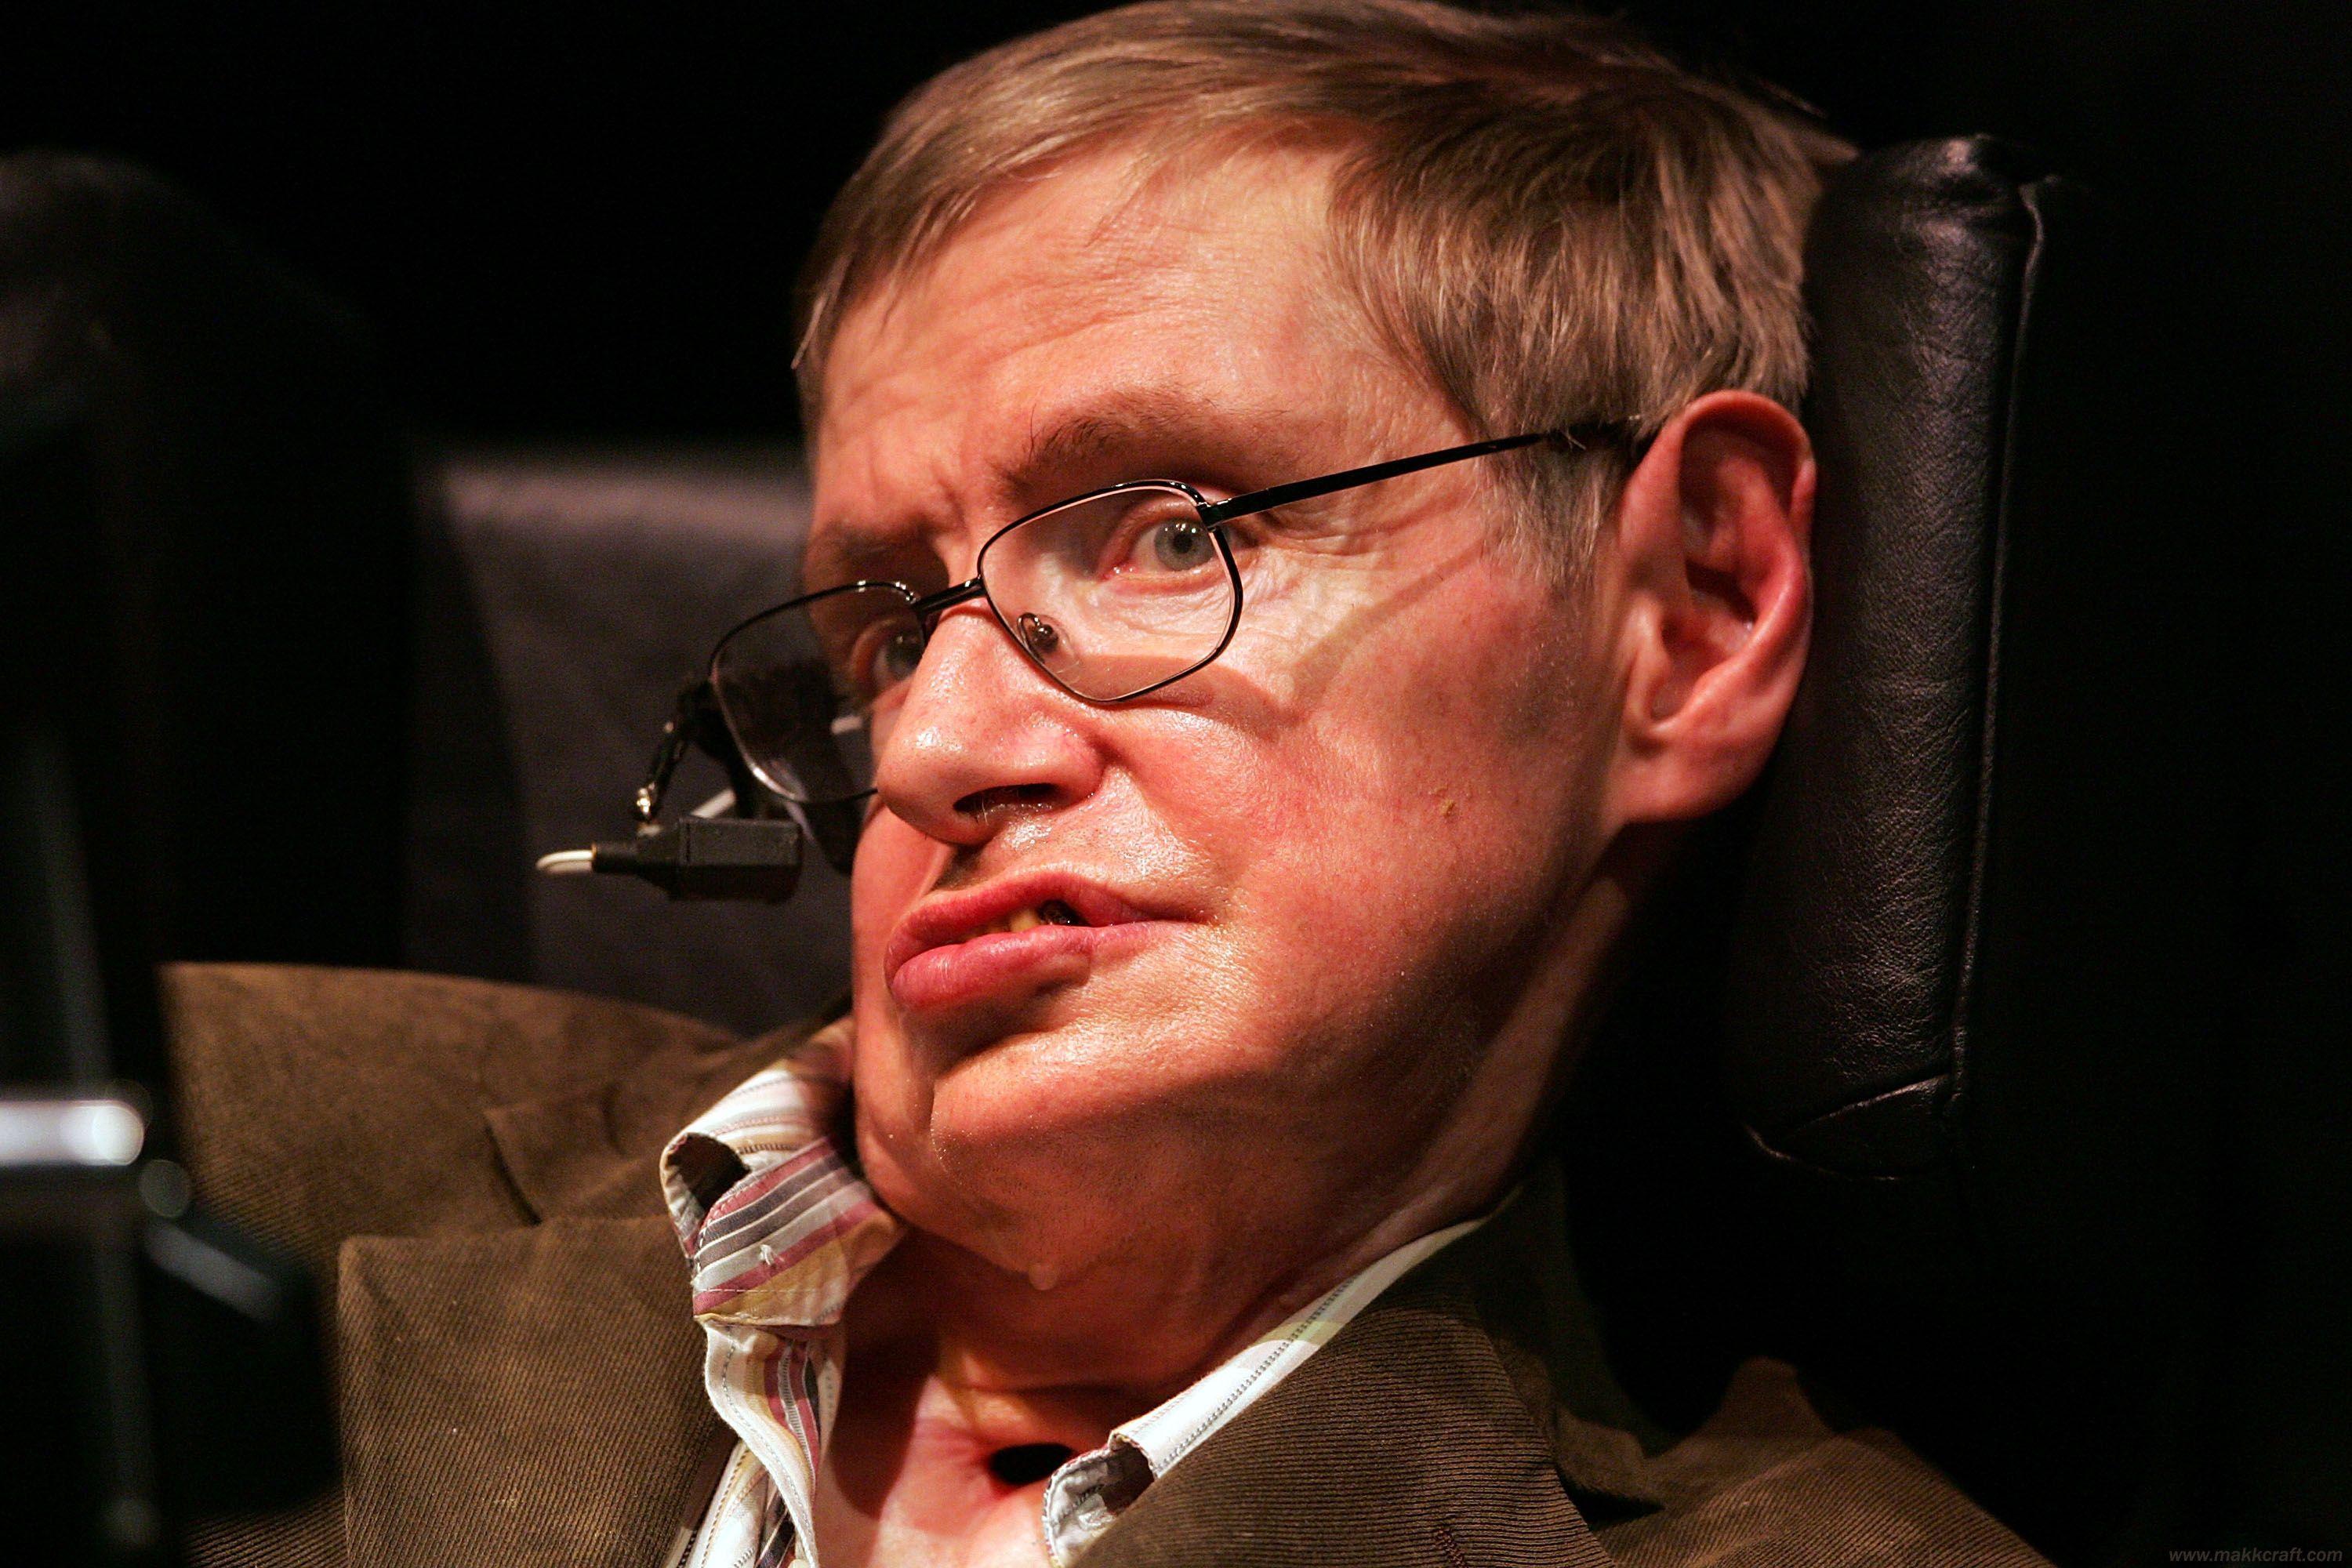 Stephen Hawking Birthday 79 (id: 14588)